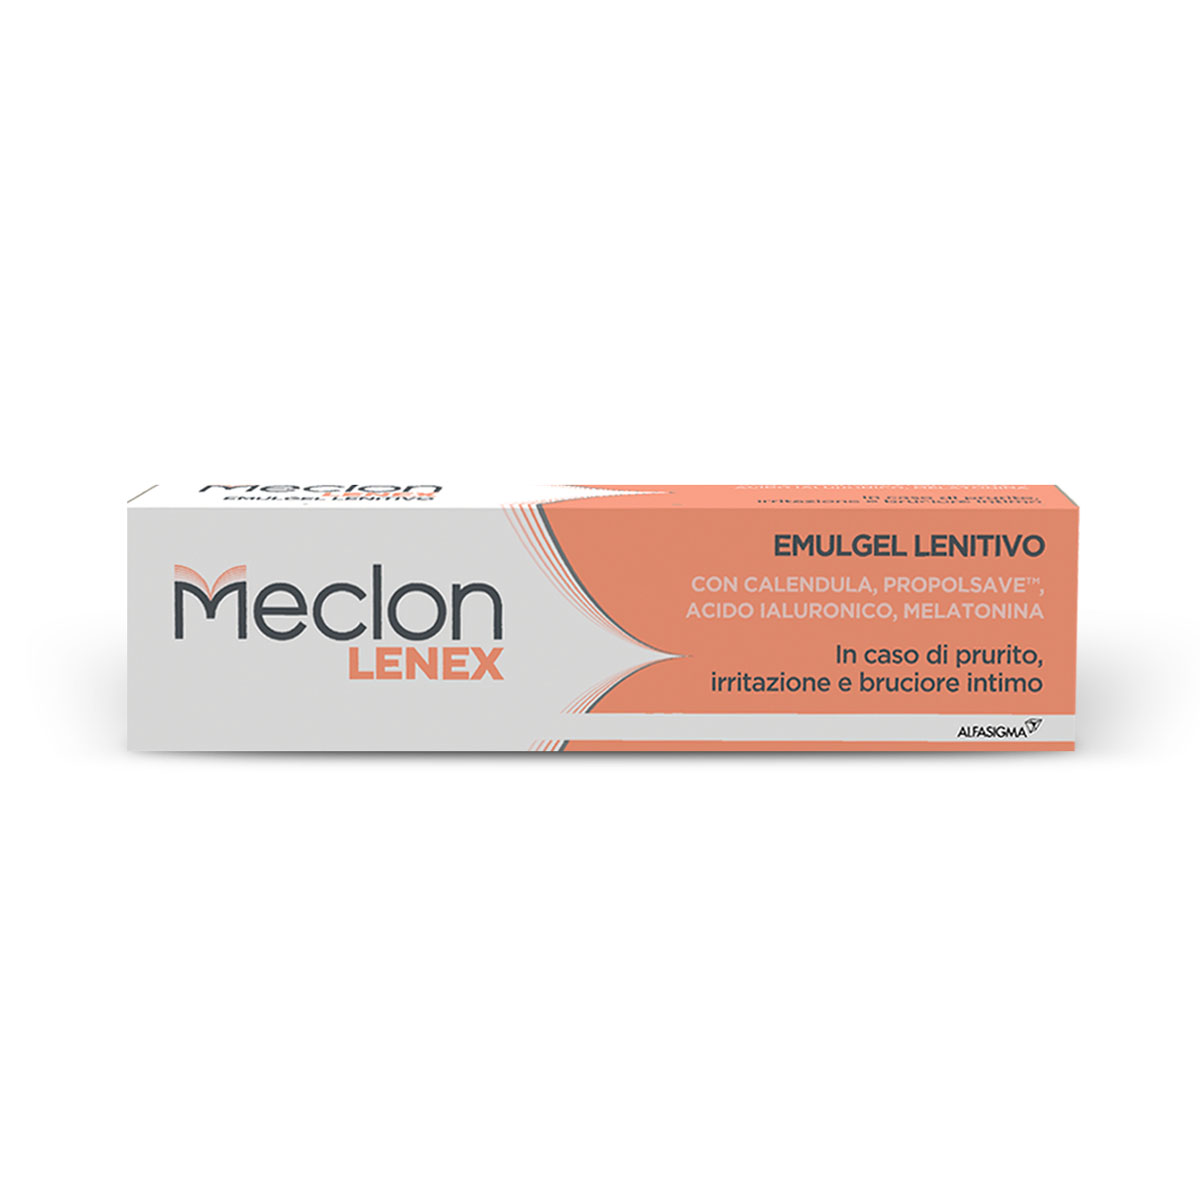 984163954 - MECLON LENEX EMULGEL 50 ML - 4710218_2.jpg